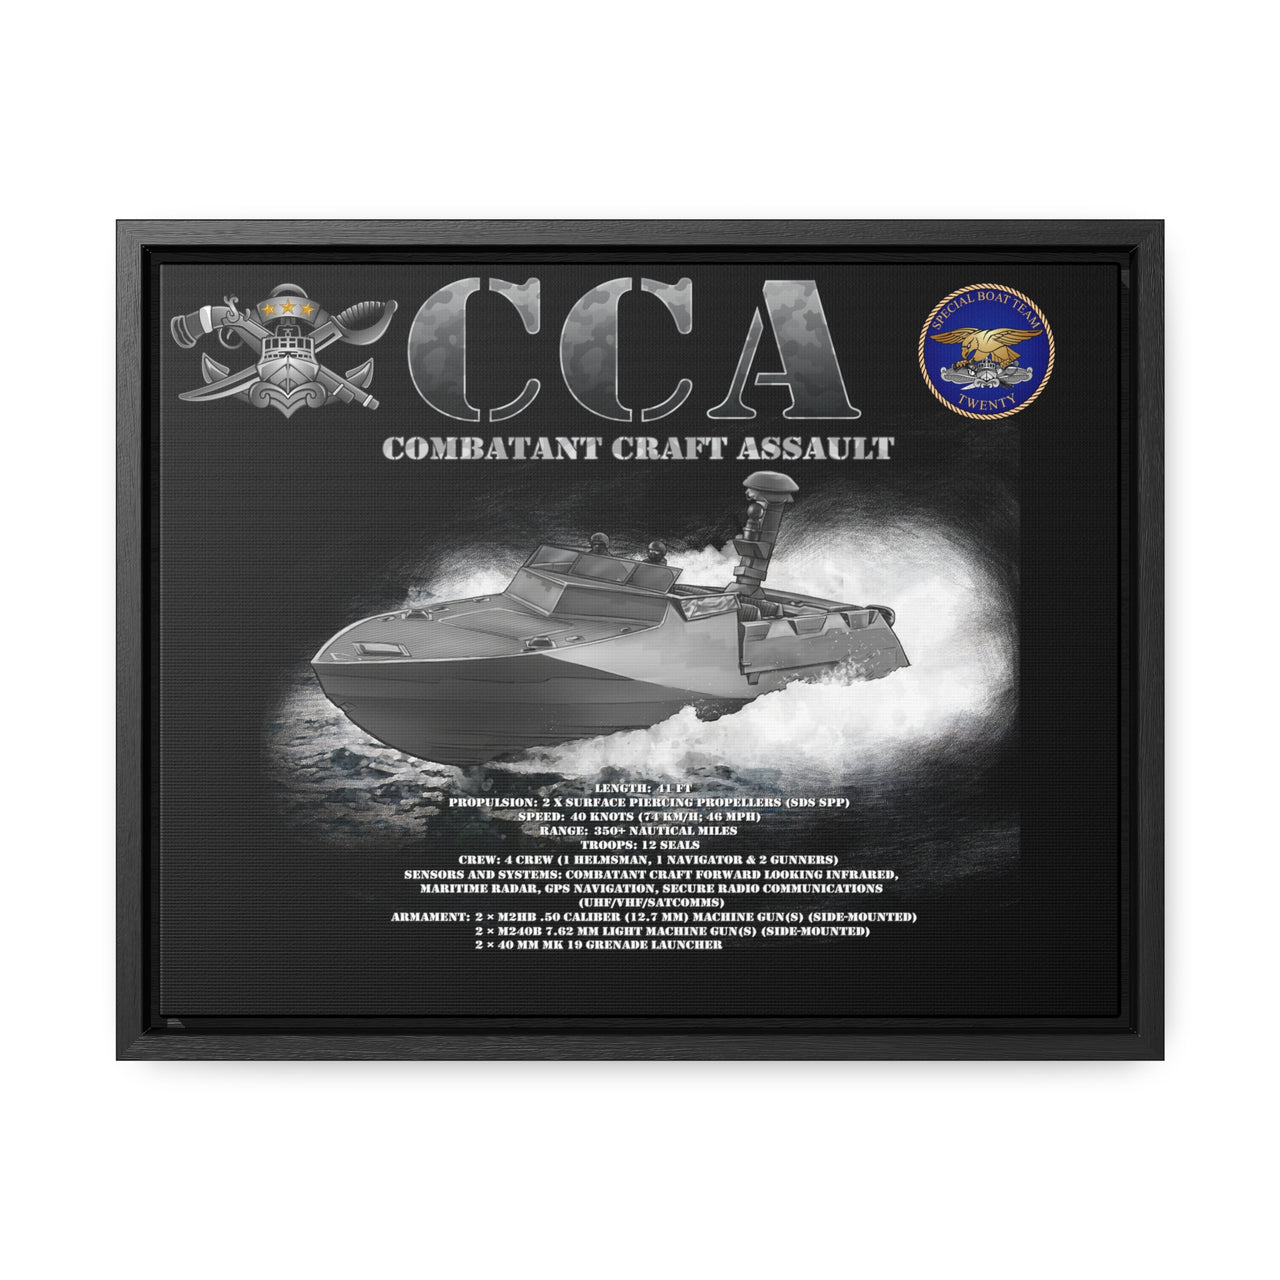 Combatant Craft Assault, CCA, Special Boat Team 20, SBT 20